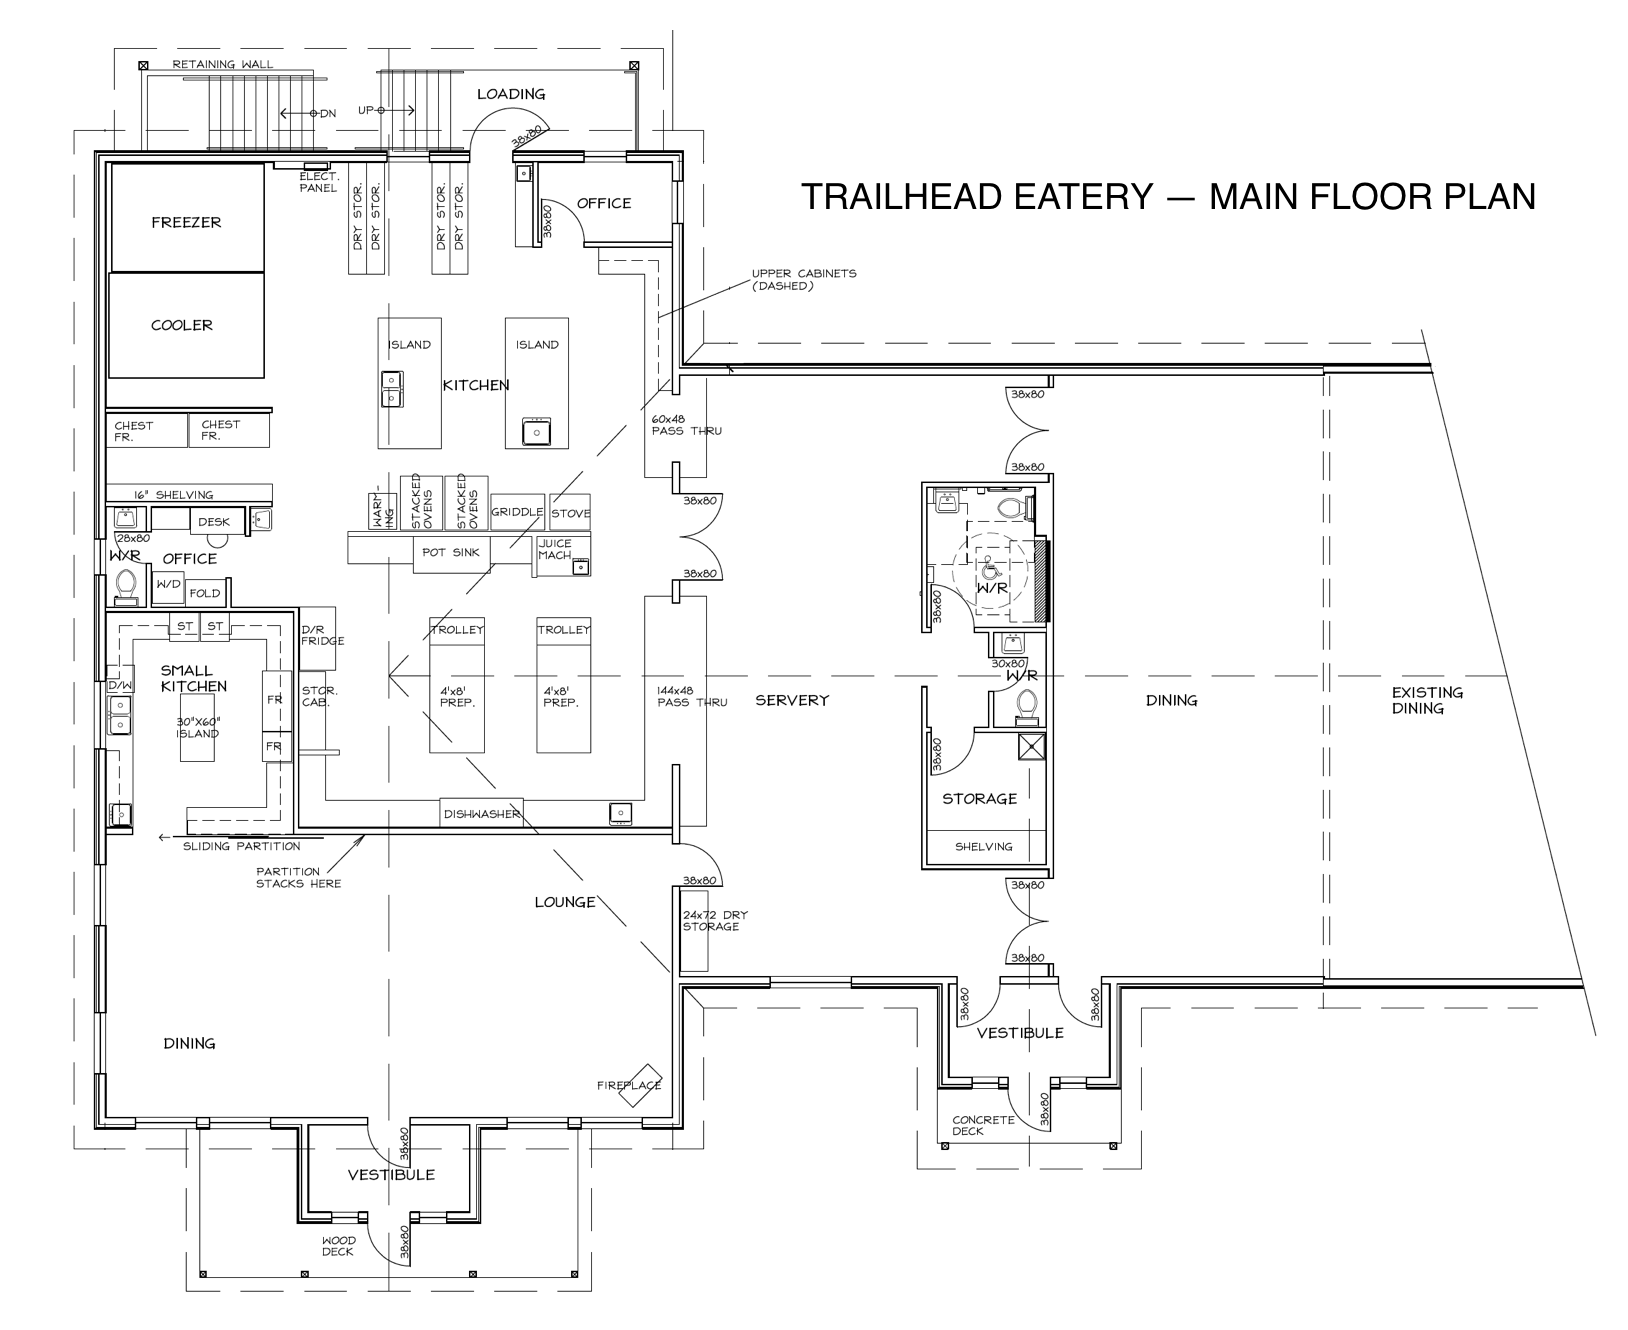 floor plans for the main floor of the Trailhead Eatery